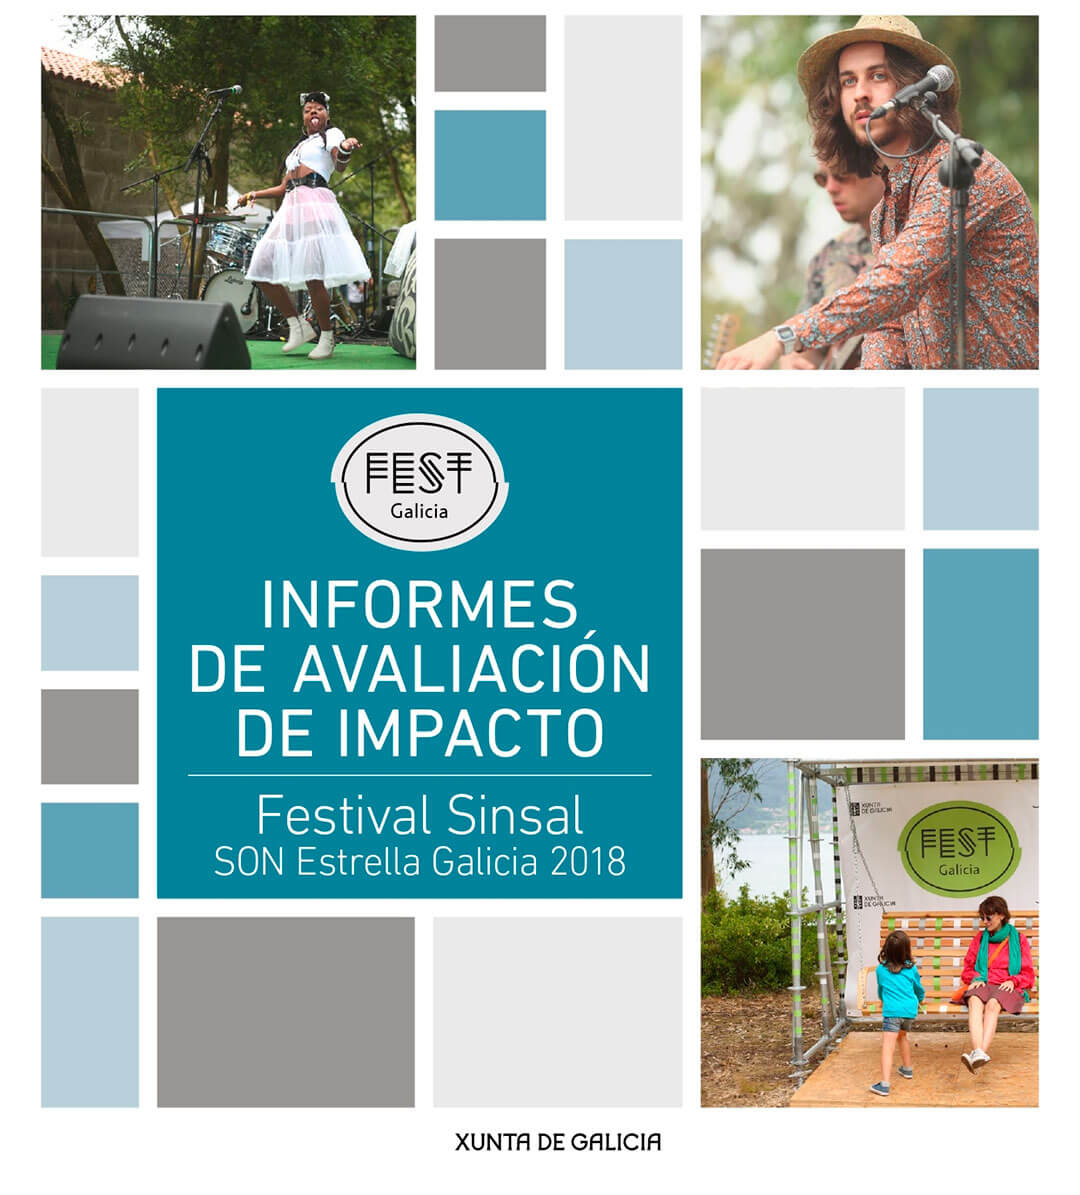 Fest-Galicia-informe-avaliacion-impacto-festival-Sinsal-2018